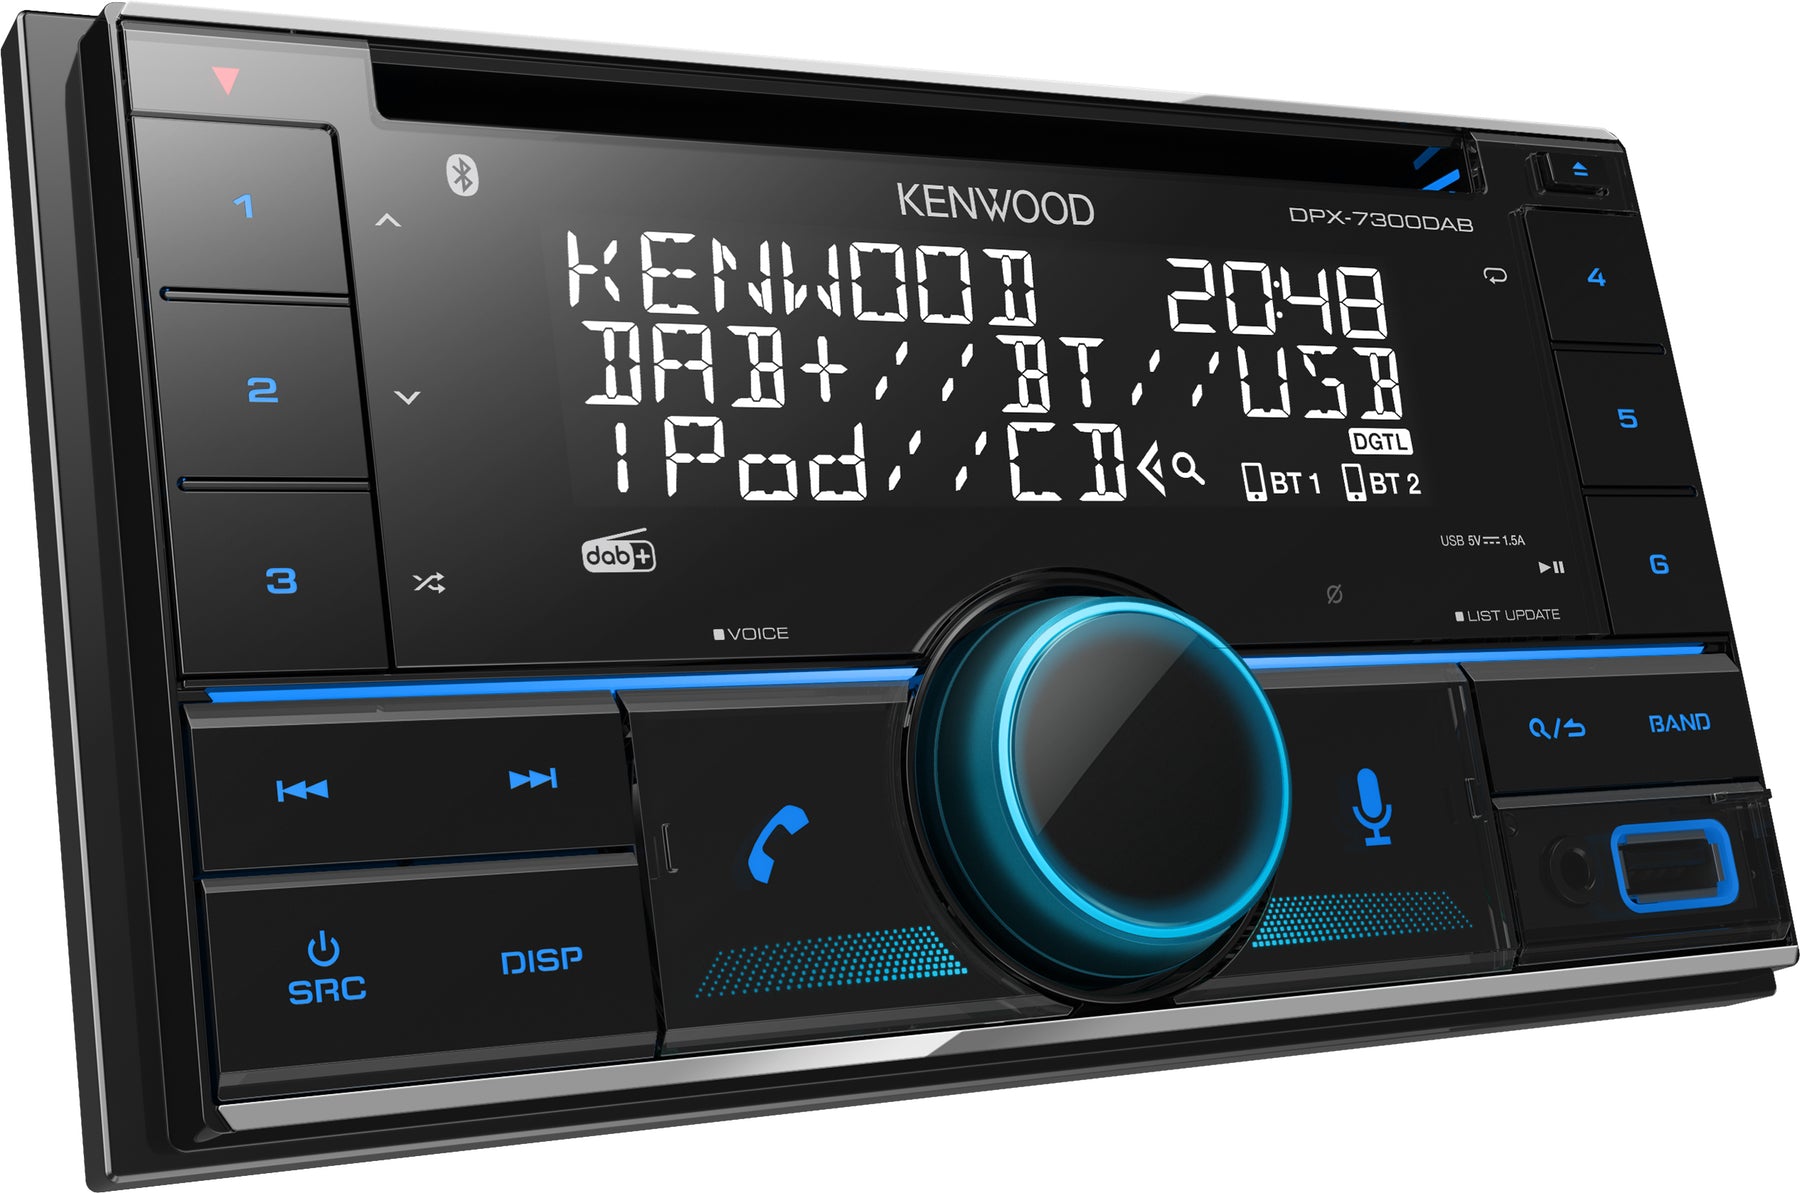 Kenwood DPX-7300DAB Sintolettore CD/USB con Digital radio DAB+, Bluetooth e assistente vocale Amazon Alexa